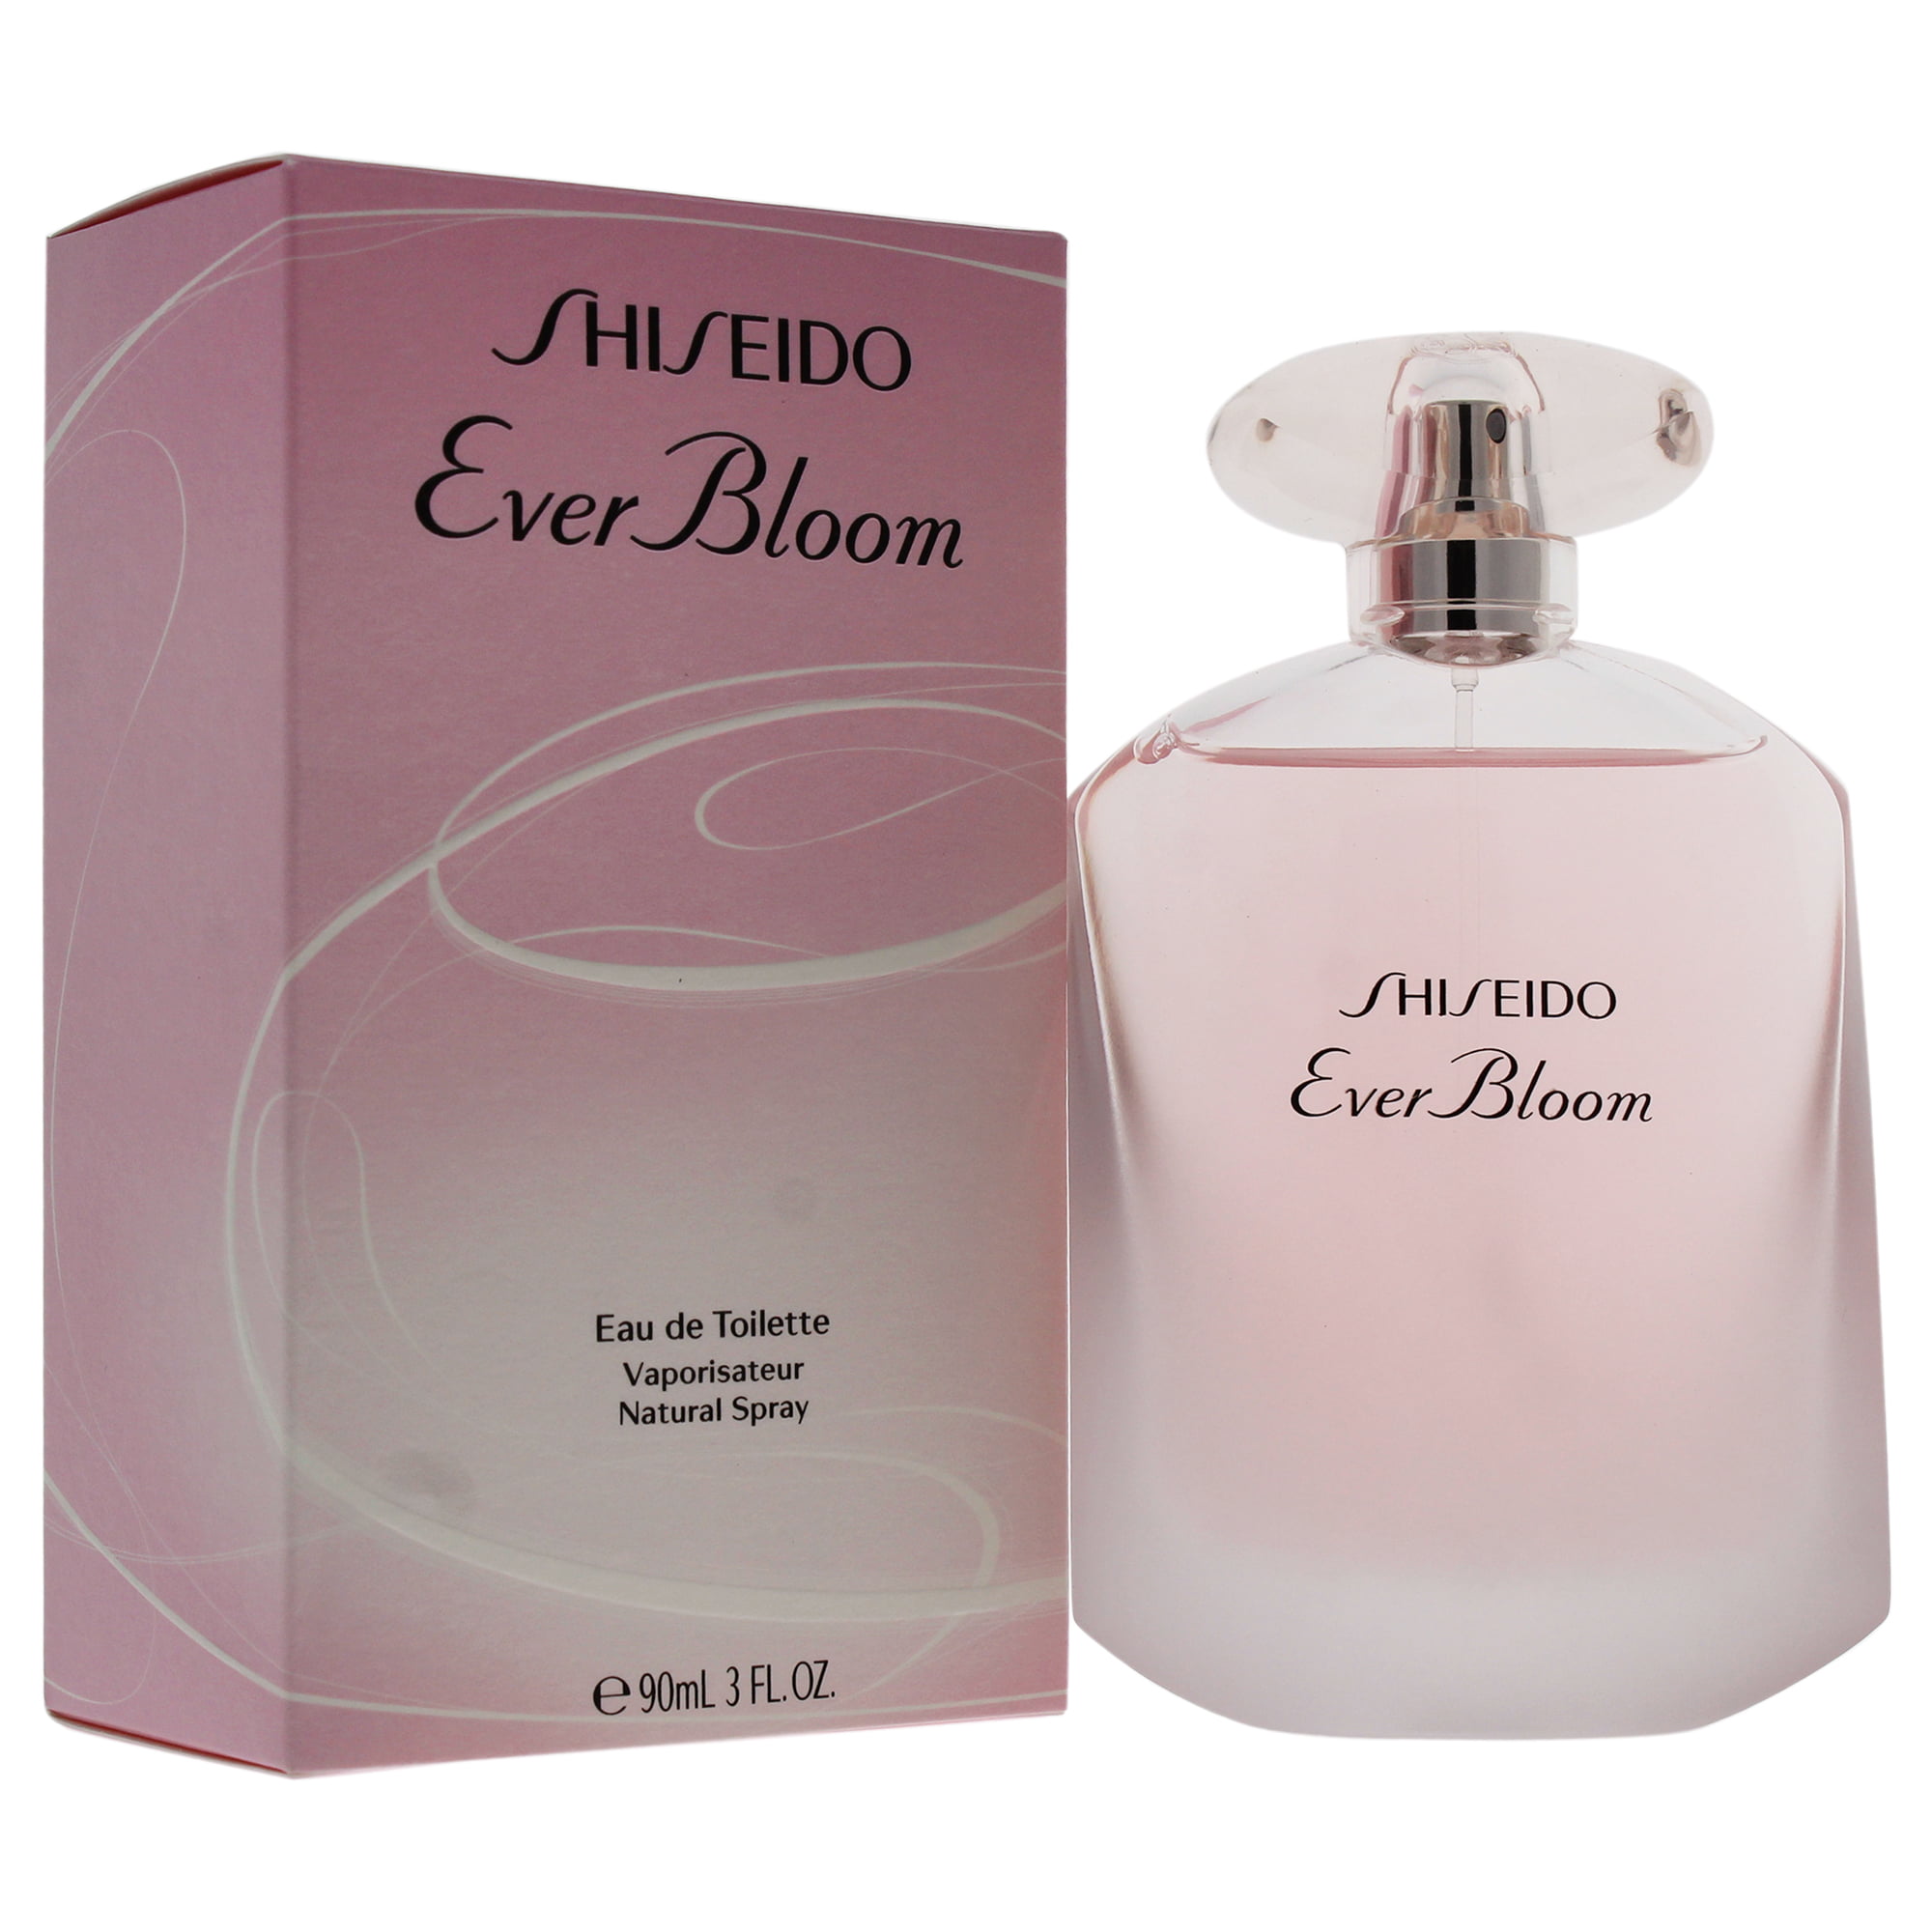 Ever Bloom by Shiseido for Women - 3 oz 